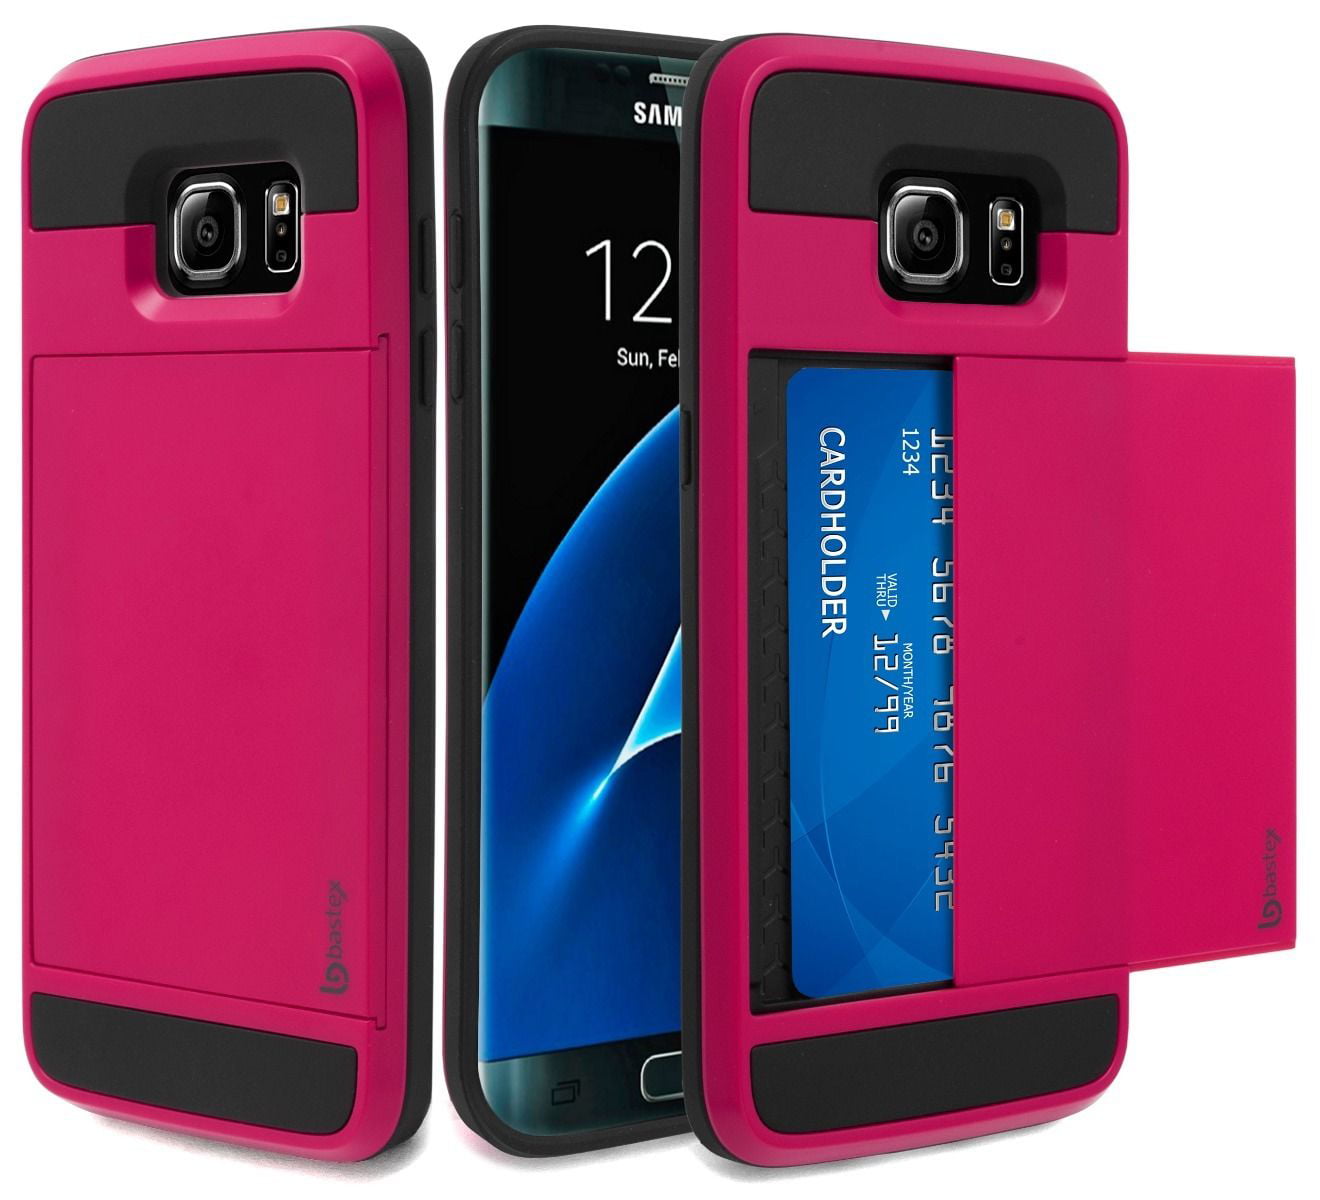 Samsung Galaxy S7 Edge Case Bastex Hybrid Black Rubber Silicone Cover Hot Pink Hard Plastic Hidden Credit Card Cash Id Holder Slot Case For Samsung Galaxy S7 Edge G935 Walmart Com